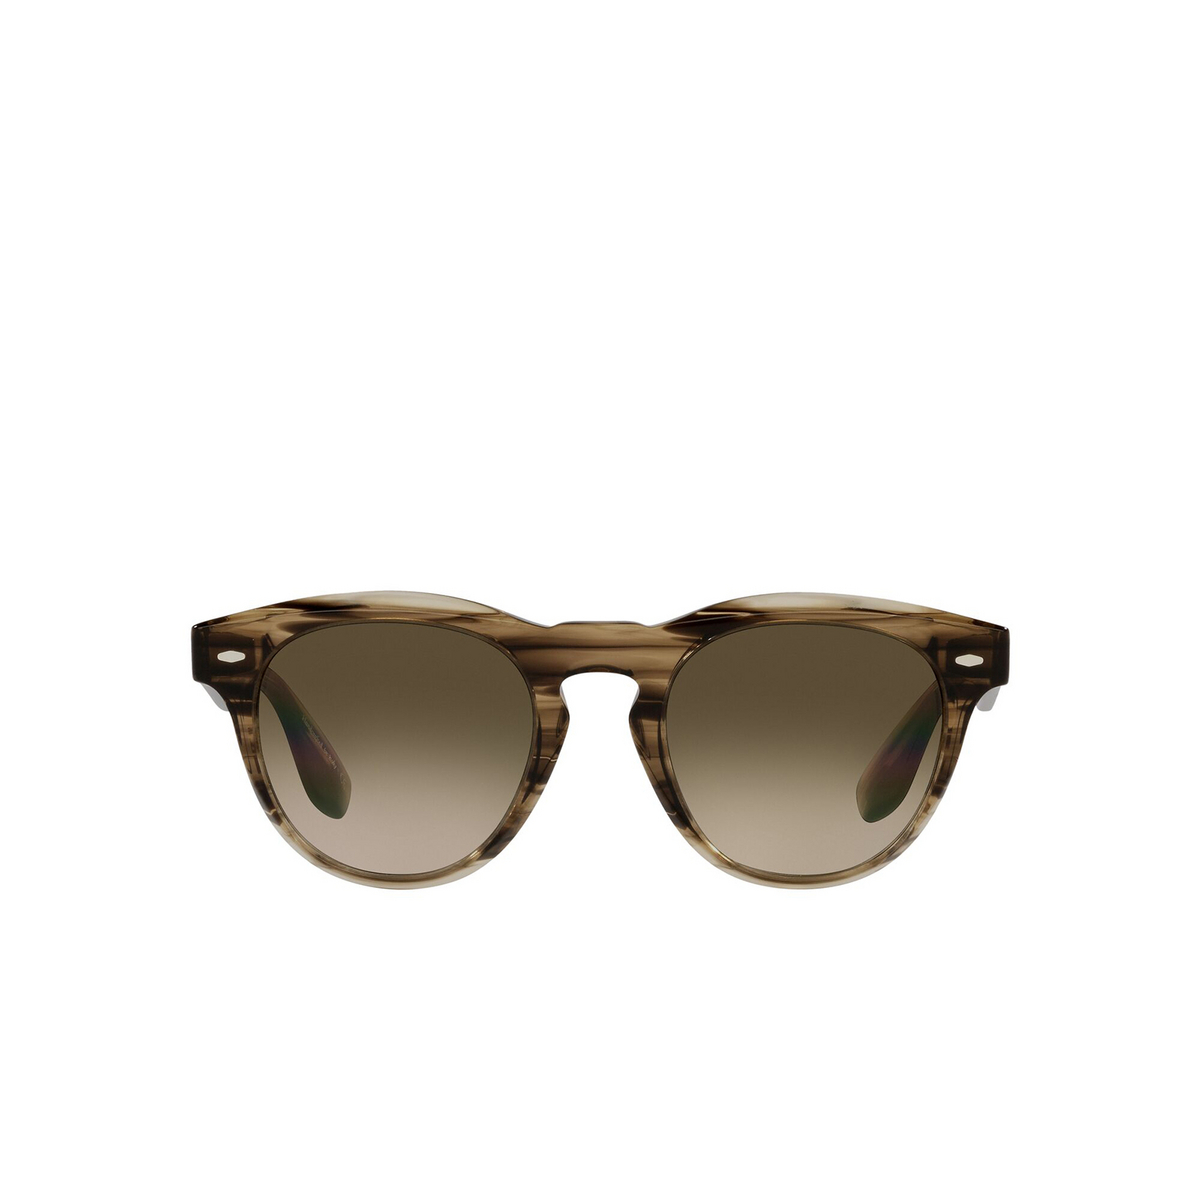 Oliver Peoples® Square Sunglasses: Nino OV5473SU color Olive Smoke 171985 - front view.